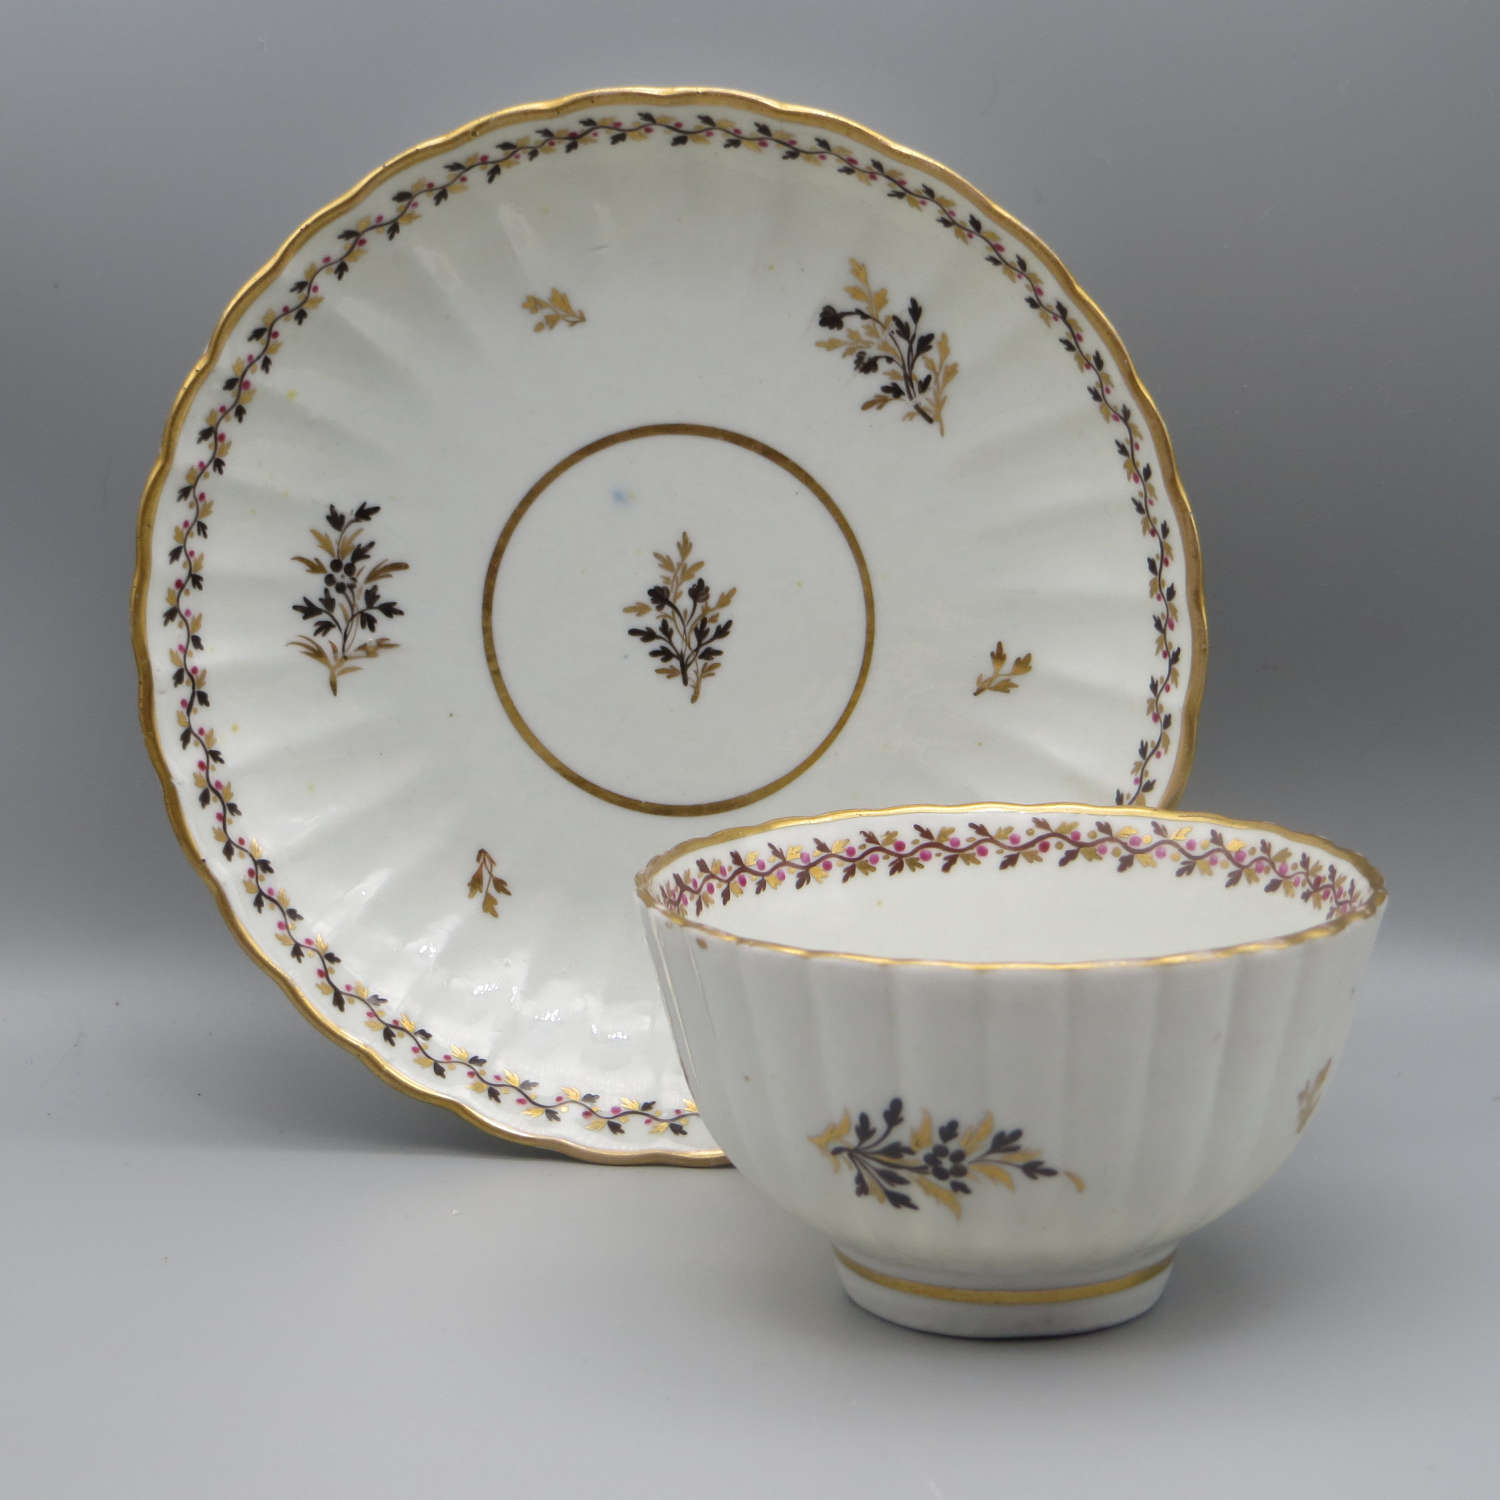 18th century Chamberlain porcelain teabowl and saucer